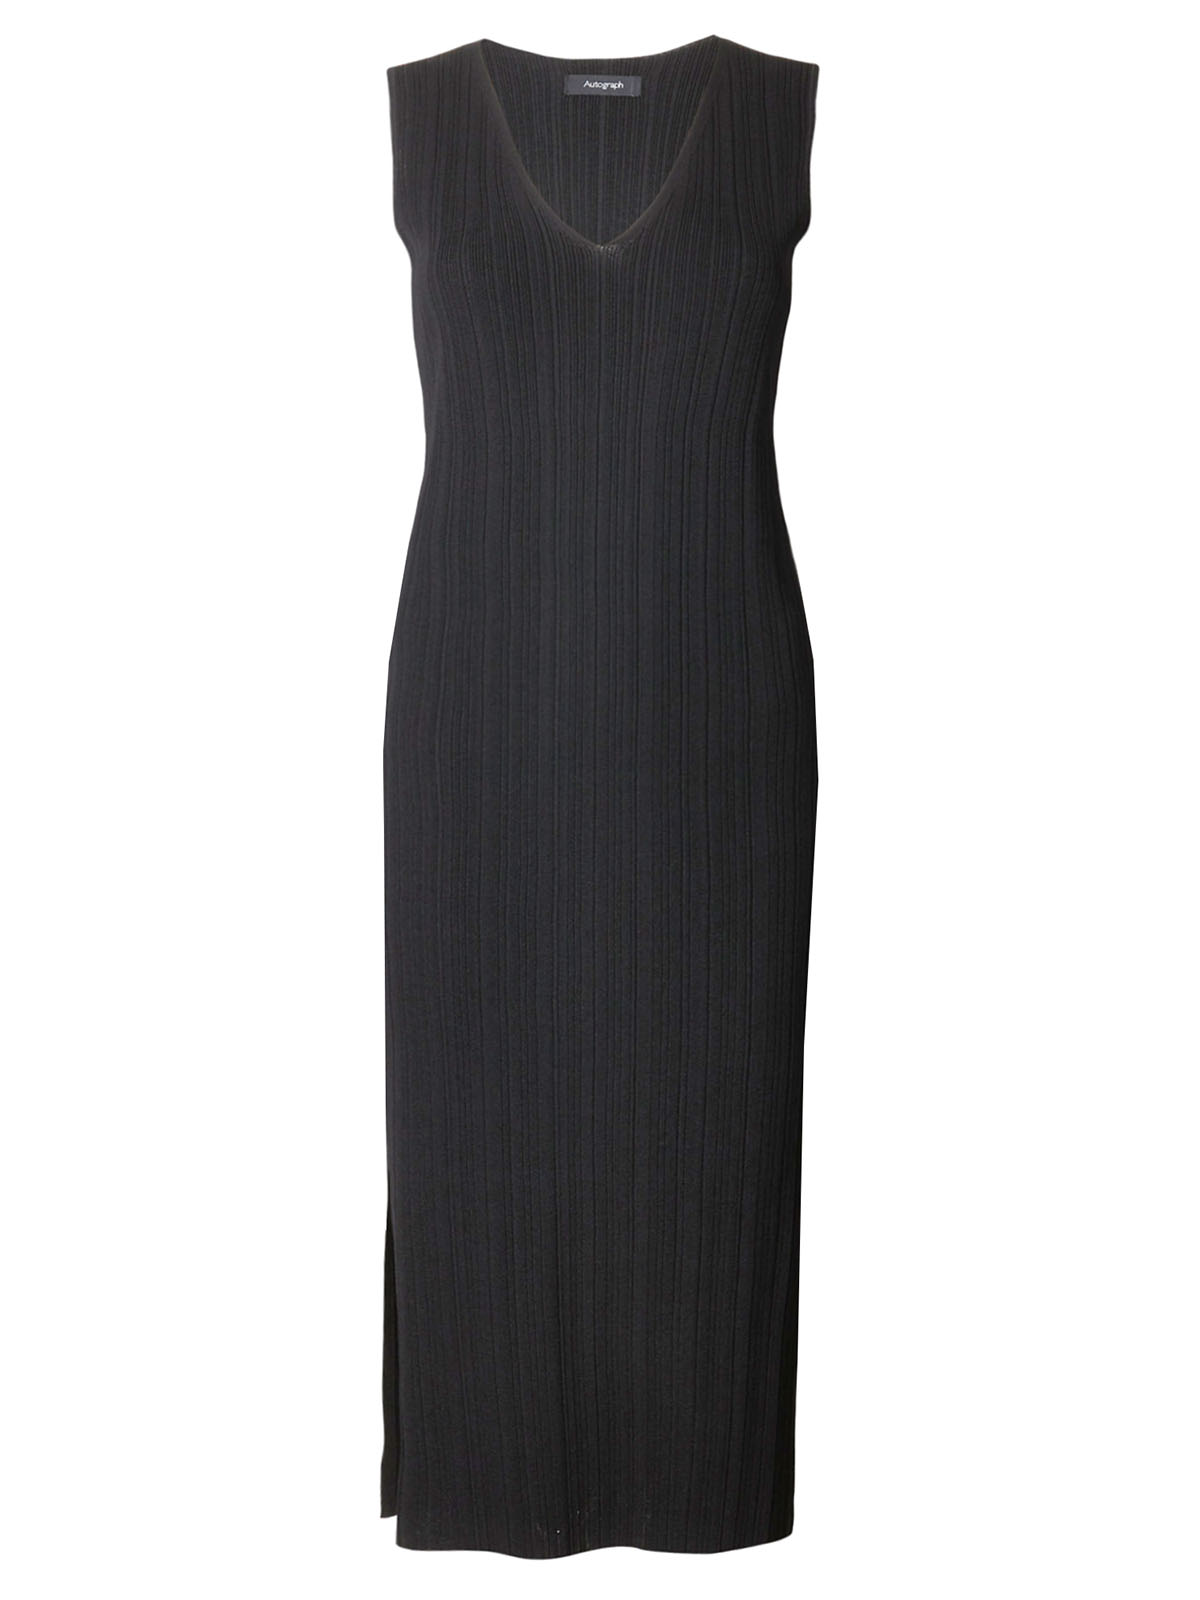 Marks and Spencer - - M&5 4utograph BLACK Textured V-Neck Knitted Dress ...